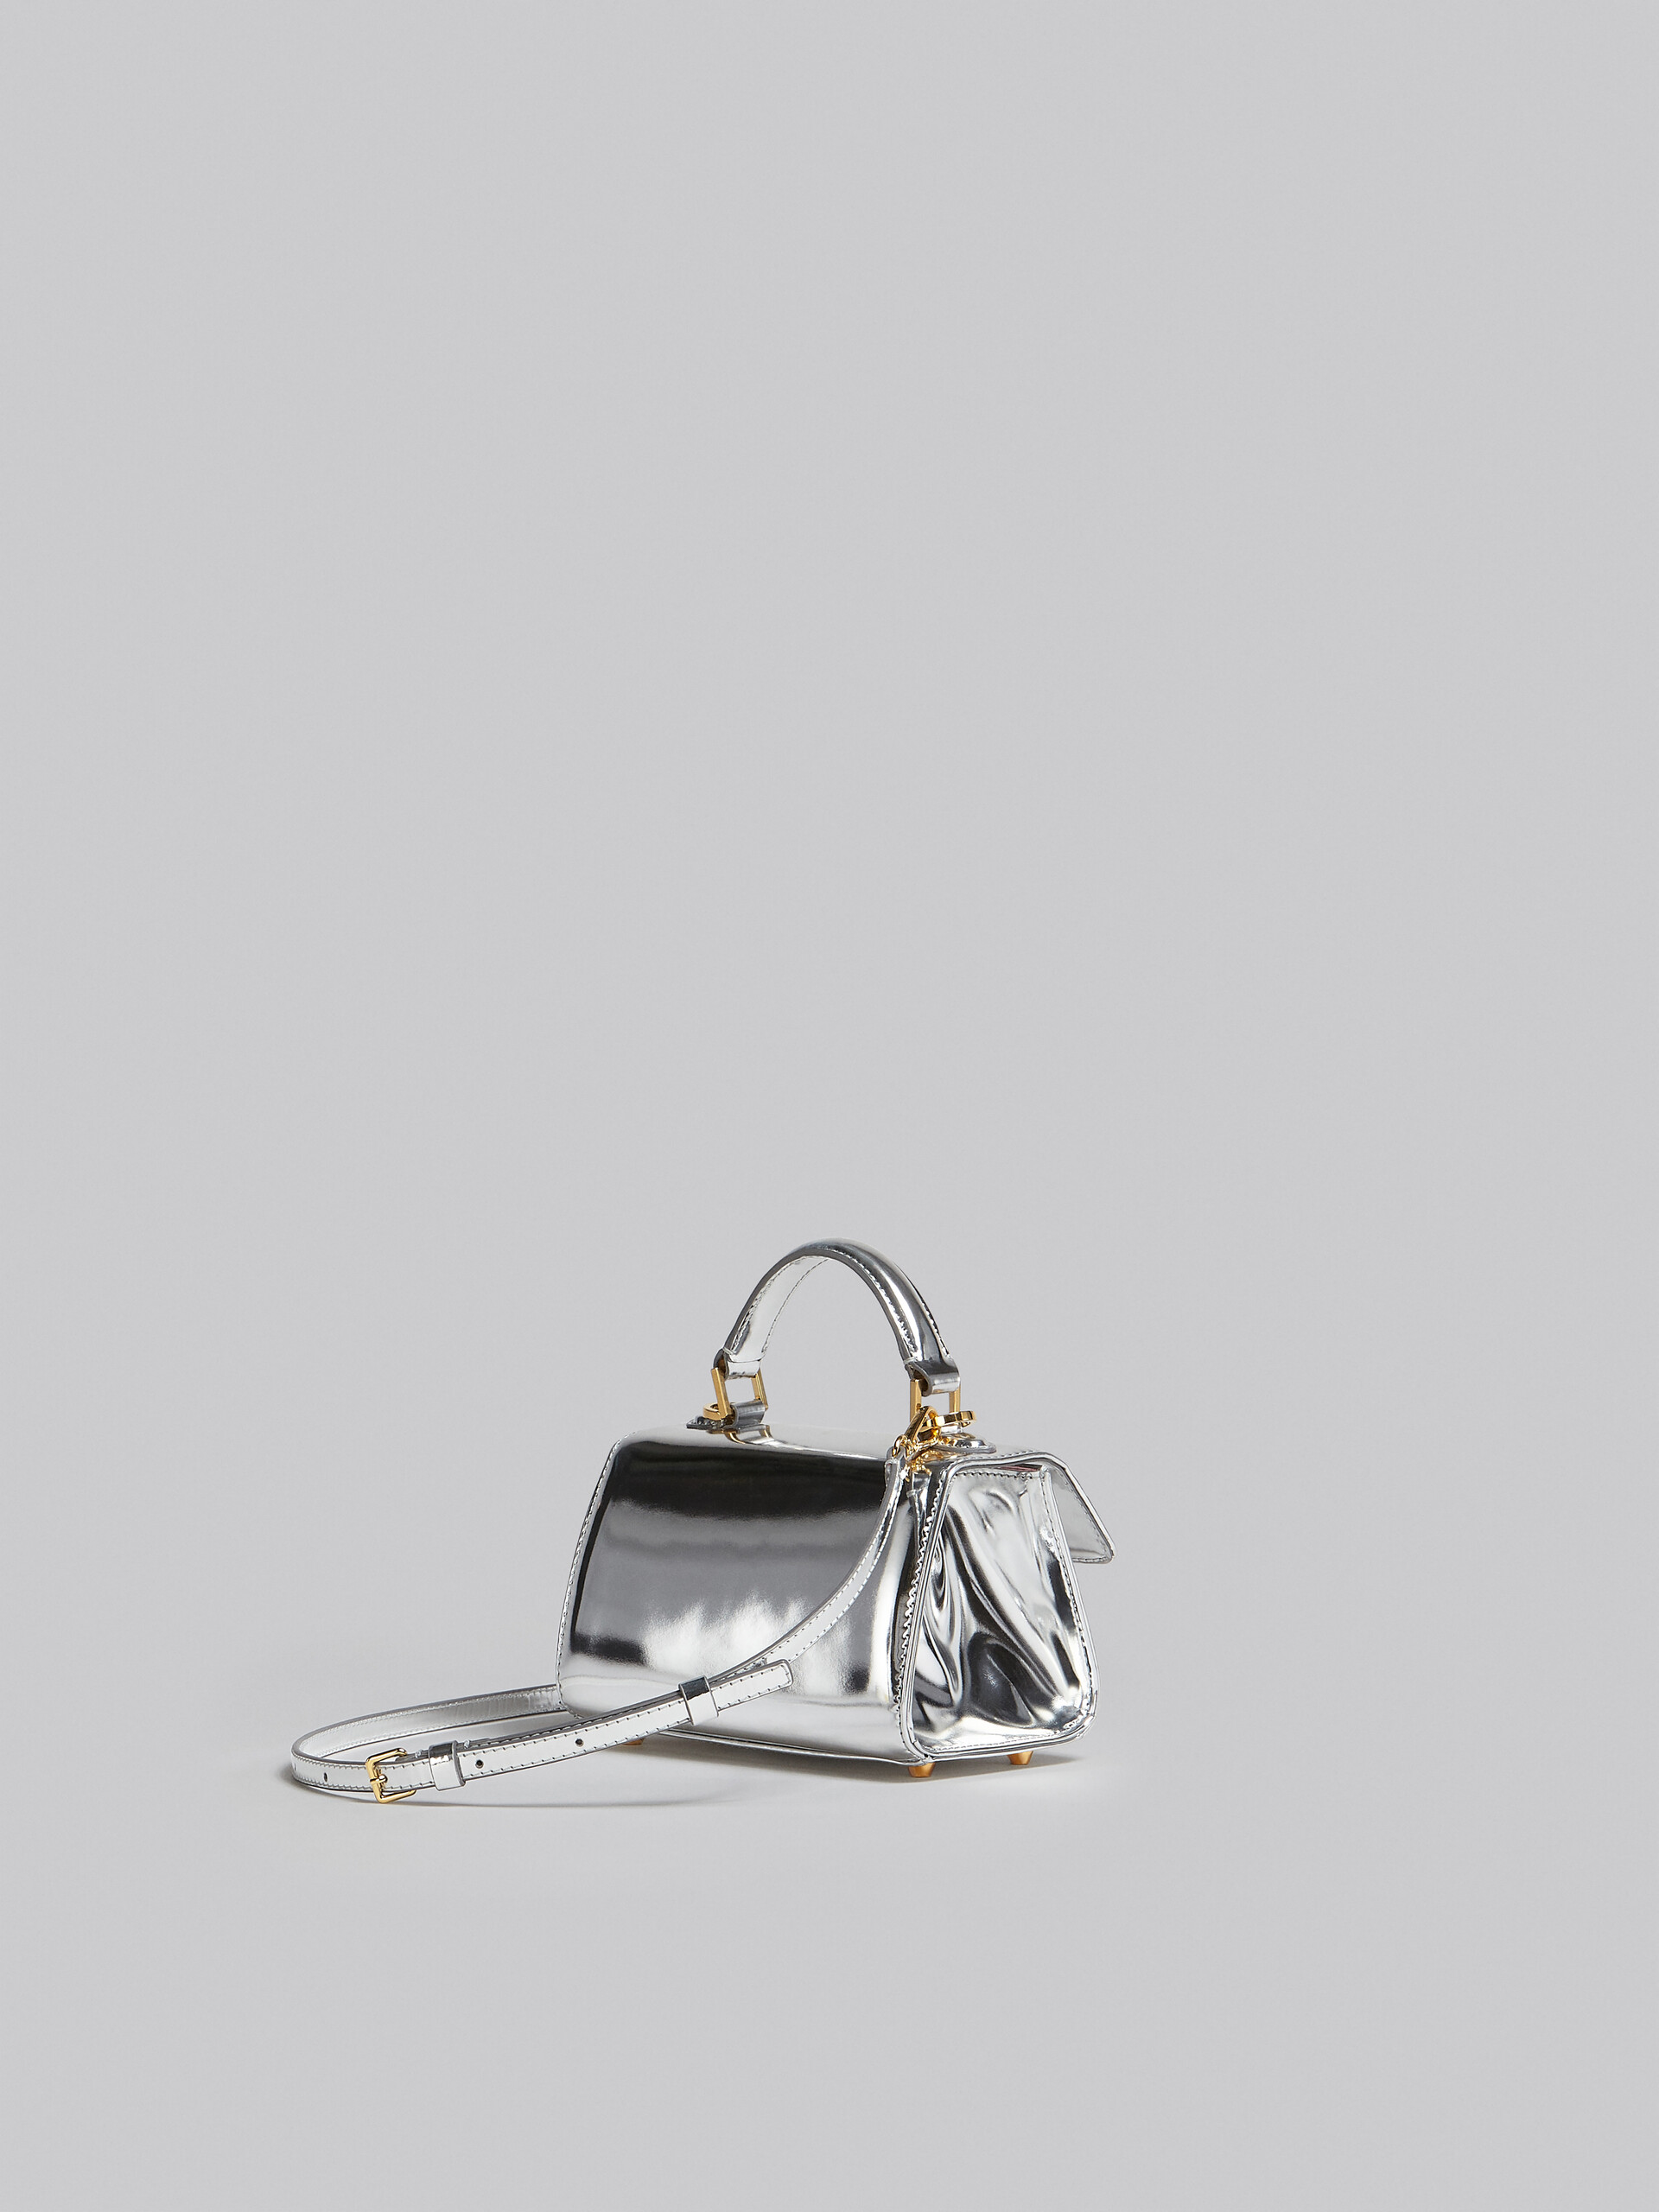 Relativity Mini Bag in silver mirrored leather - Handbags - Image 3